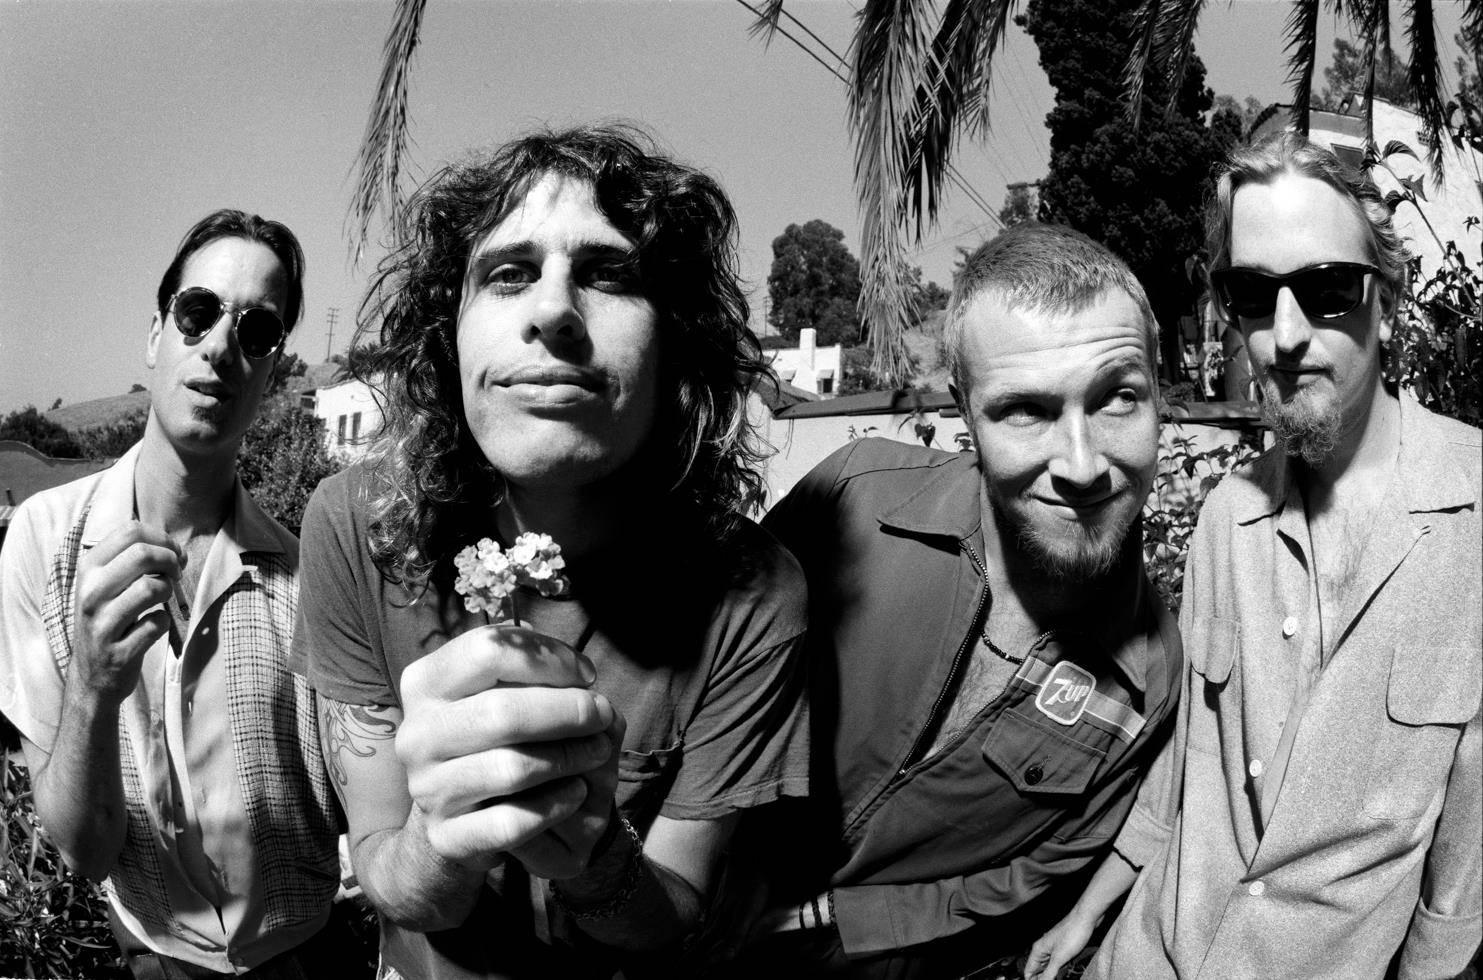 Stone Temple Pilots, LA, CA, 1993